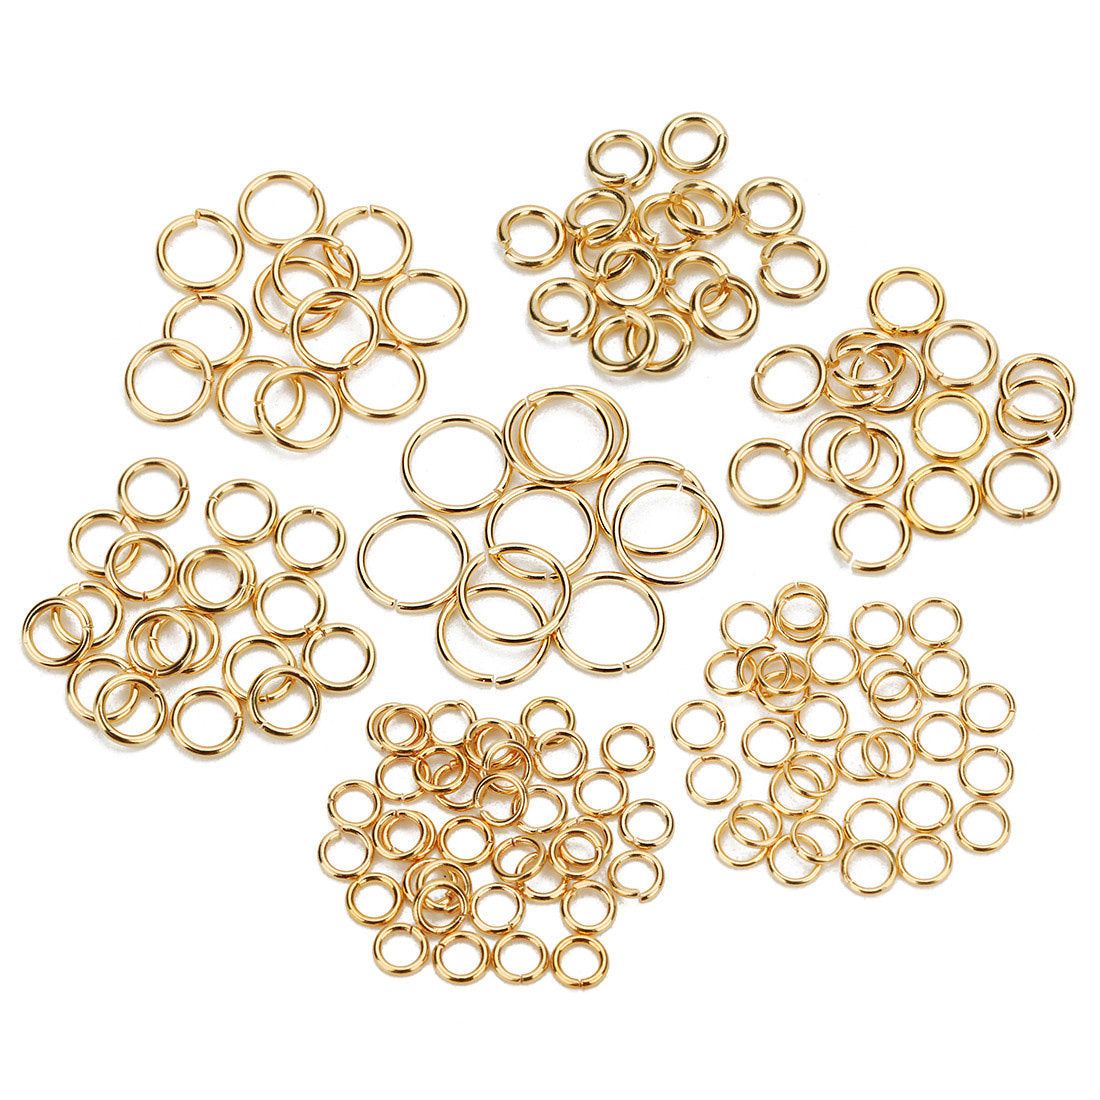 Gold Stainless Steel Jump Rings 3mm - Open 26 Gauge - 300 Rings - J156